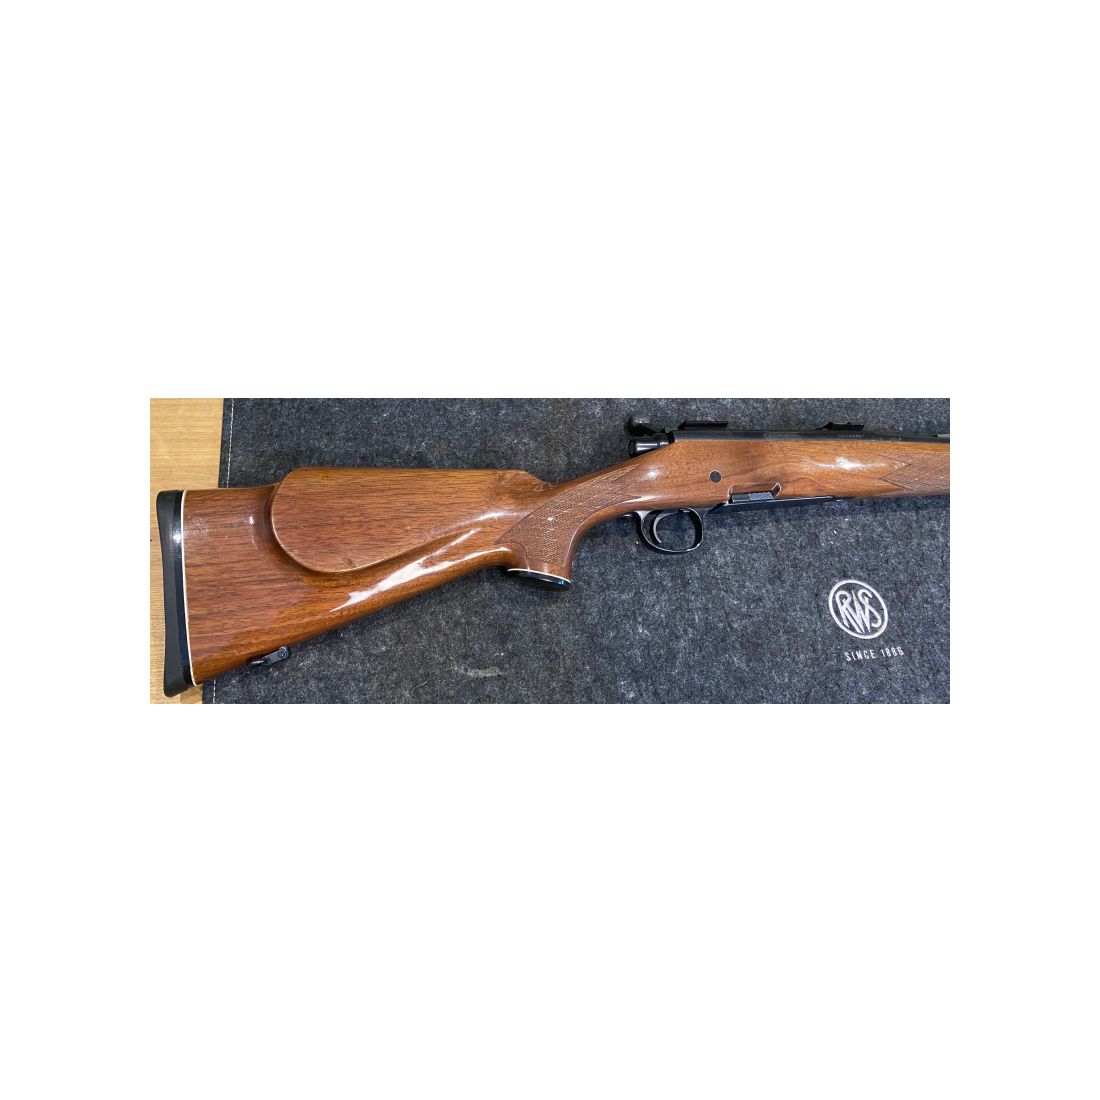 Remington 700 für Linksschützen in Kal. 30-06 - guter Zustand!!